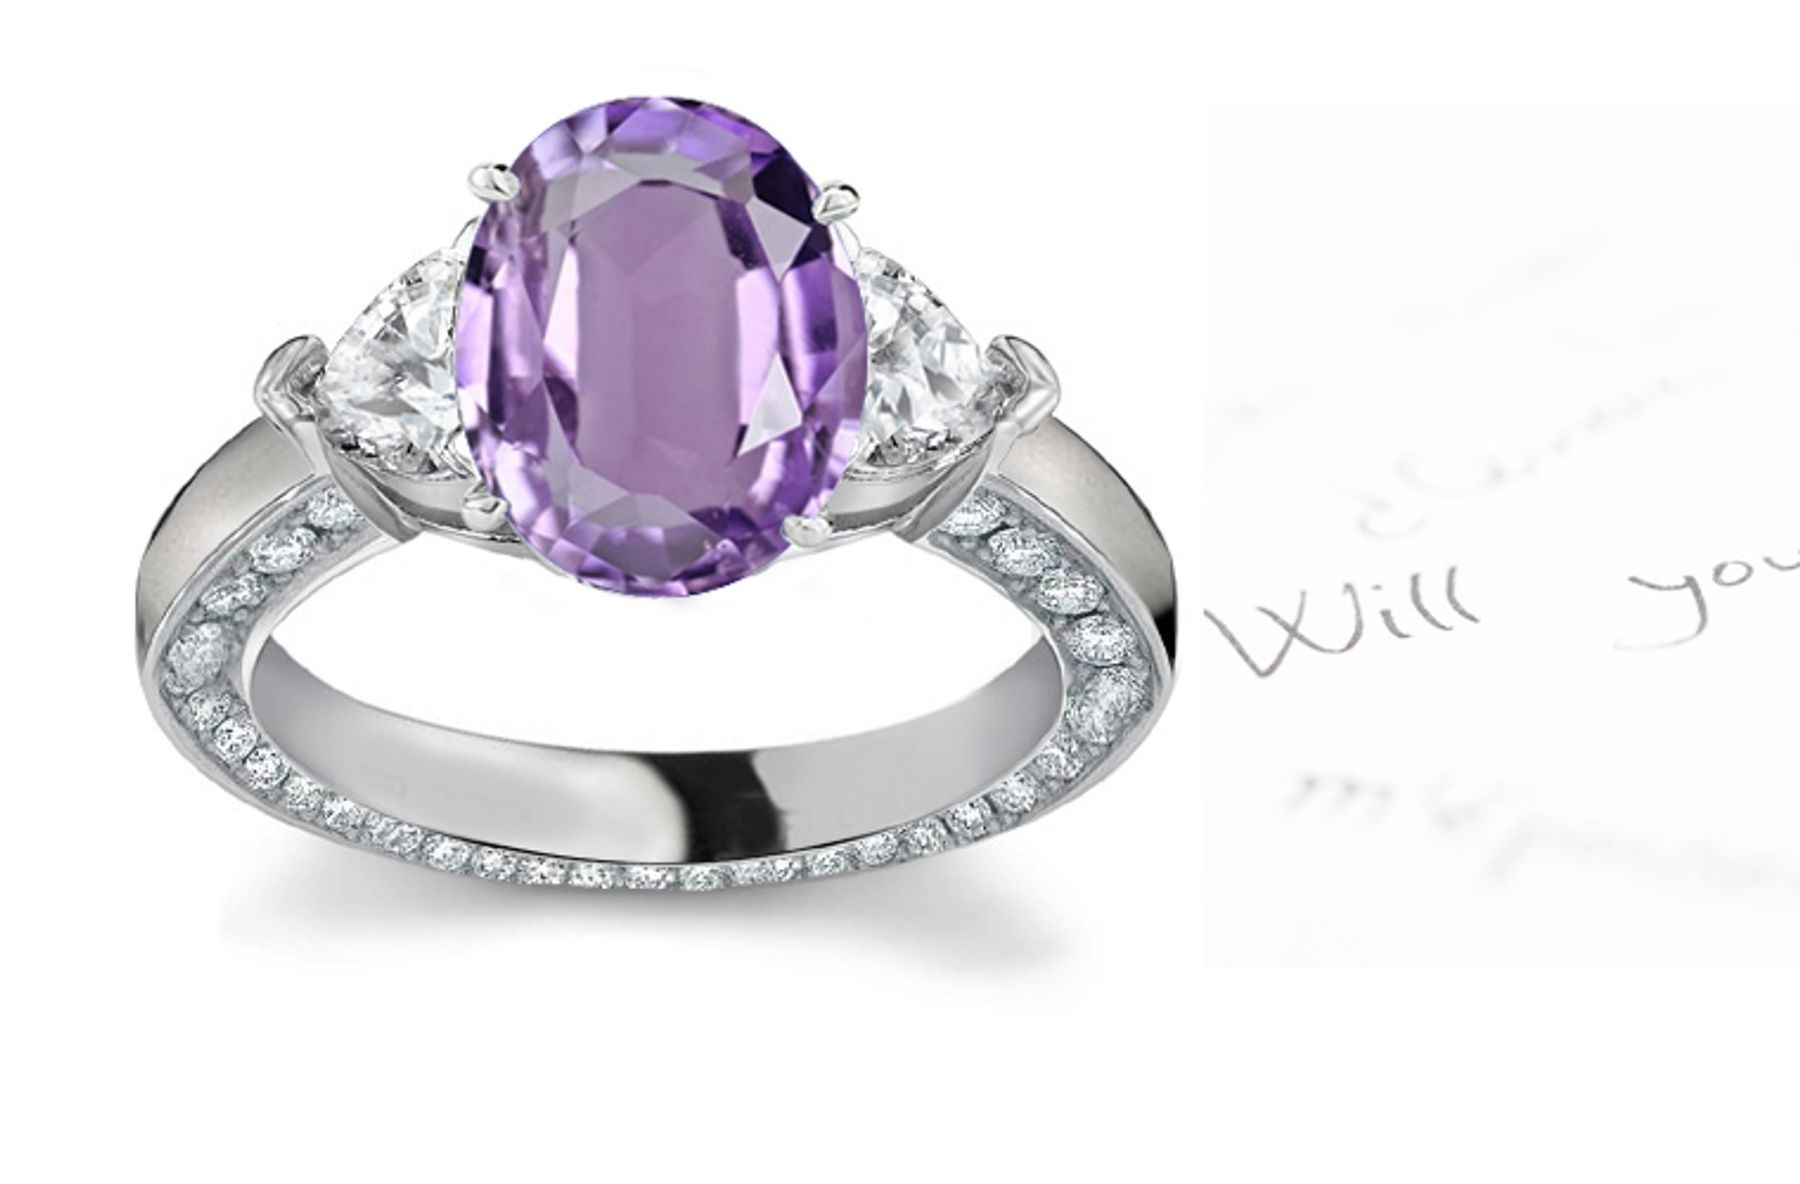 Truly Unique Diamond & Very Popular Purple Sapphire Rings